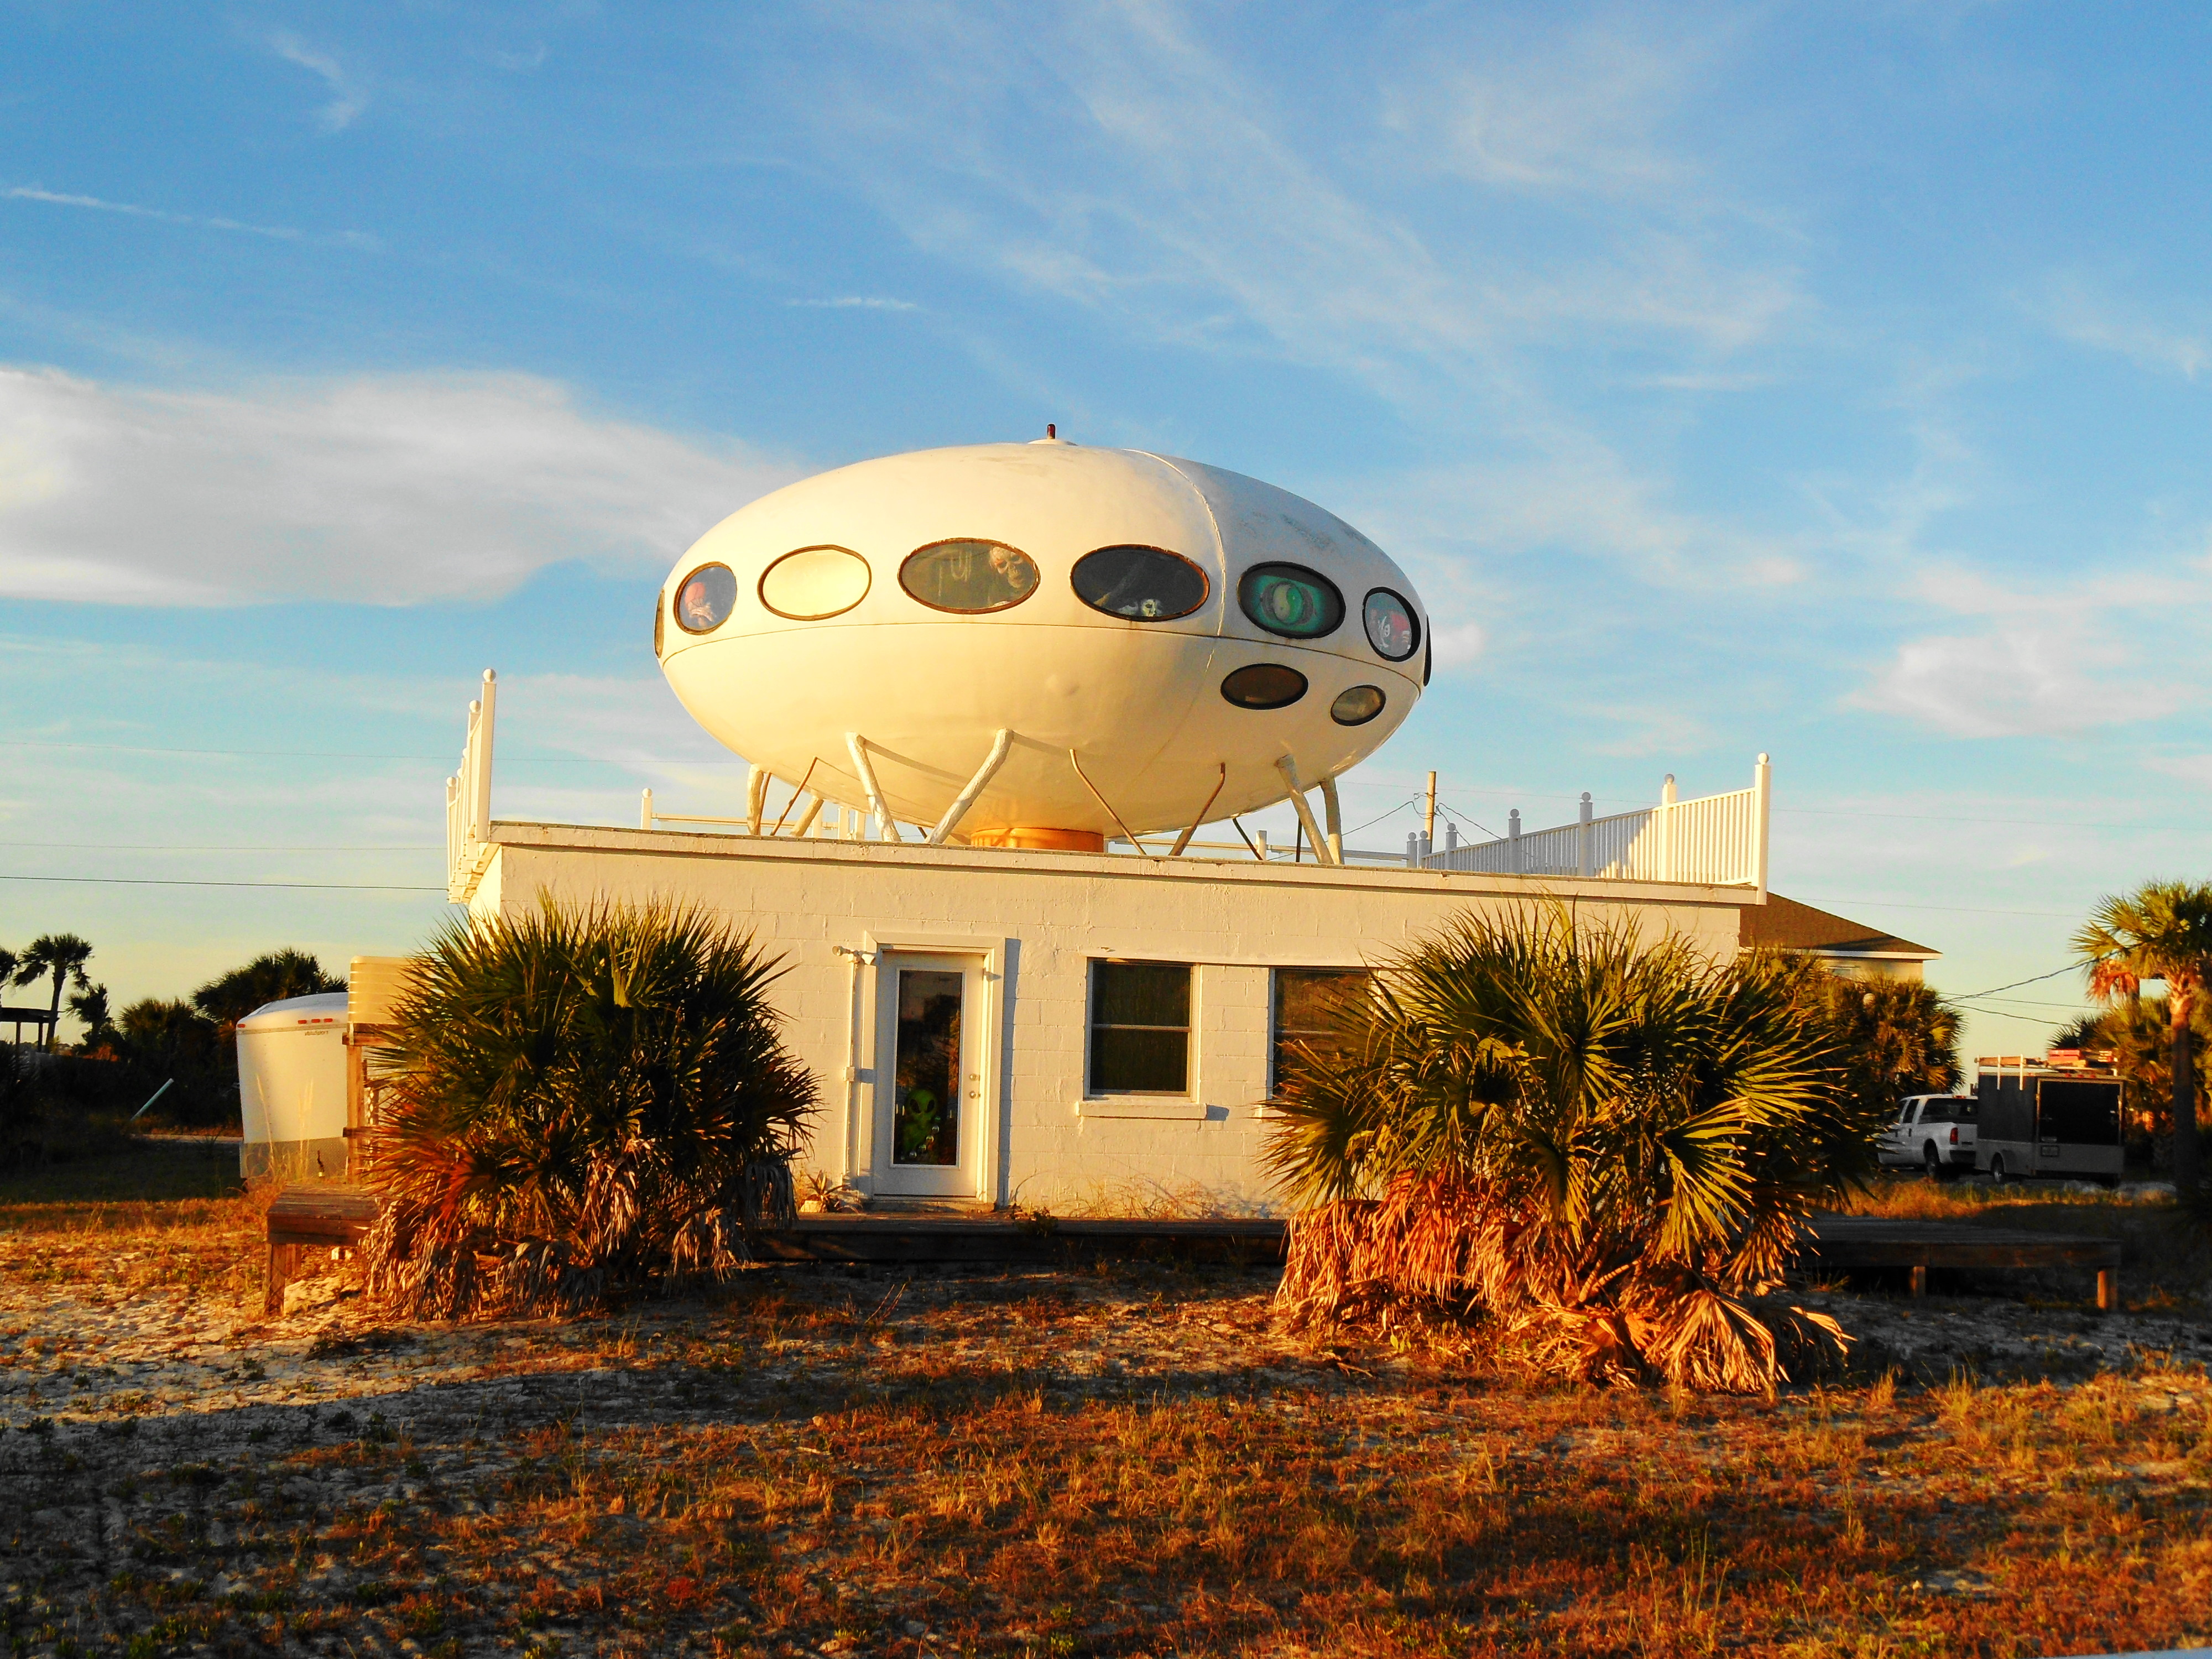 Installed on the Futuro House, Santa Rosa Island, Florida, 2012. © Ken Ratcliff / Flickr